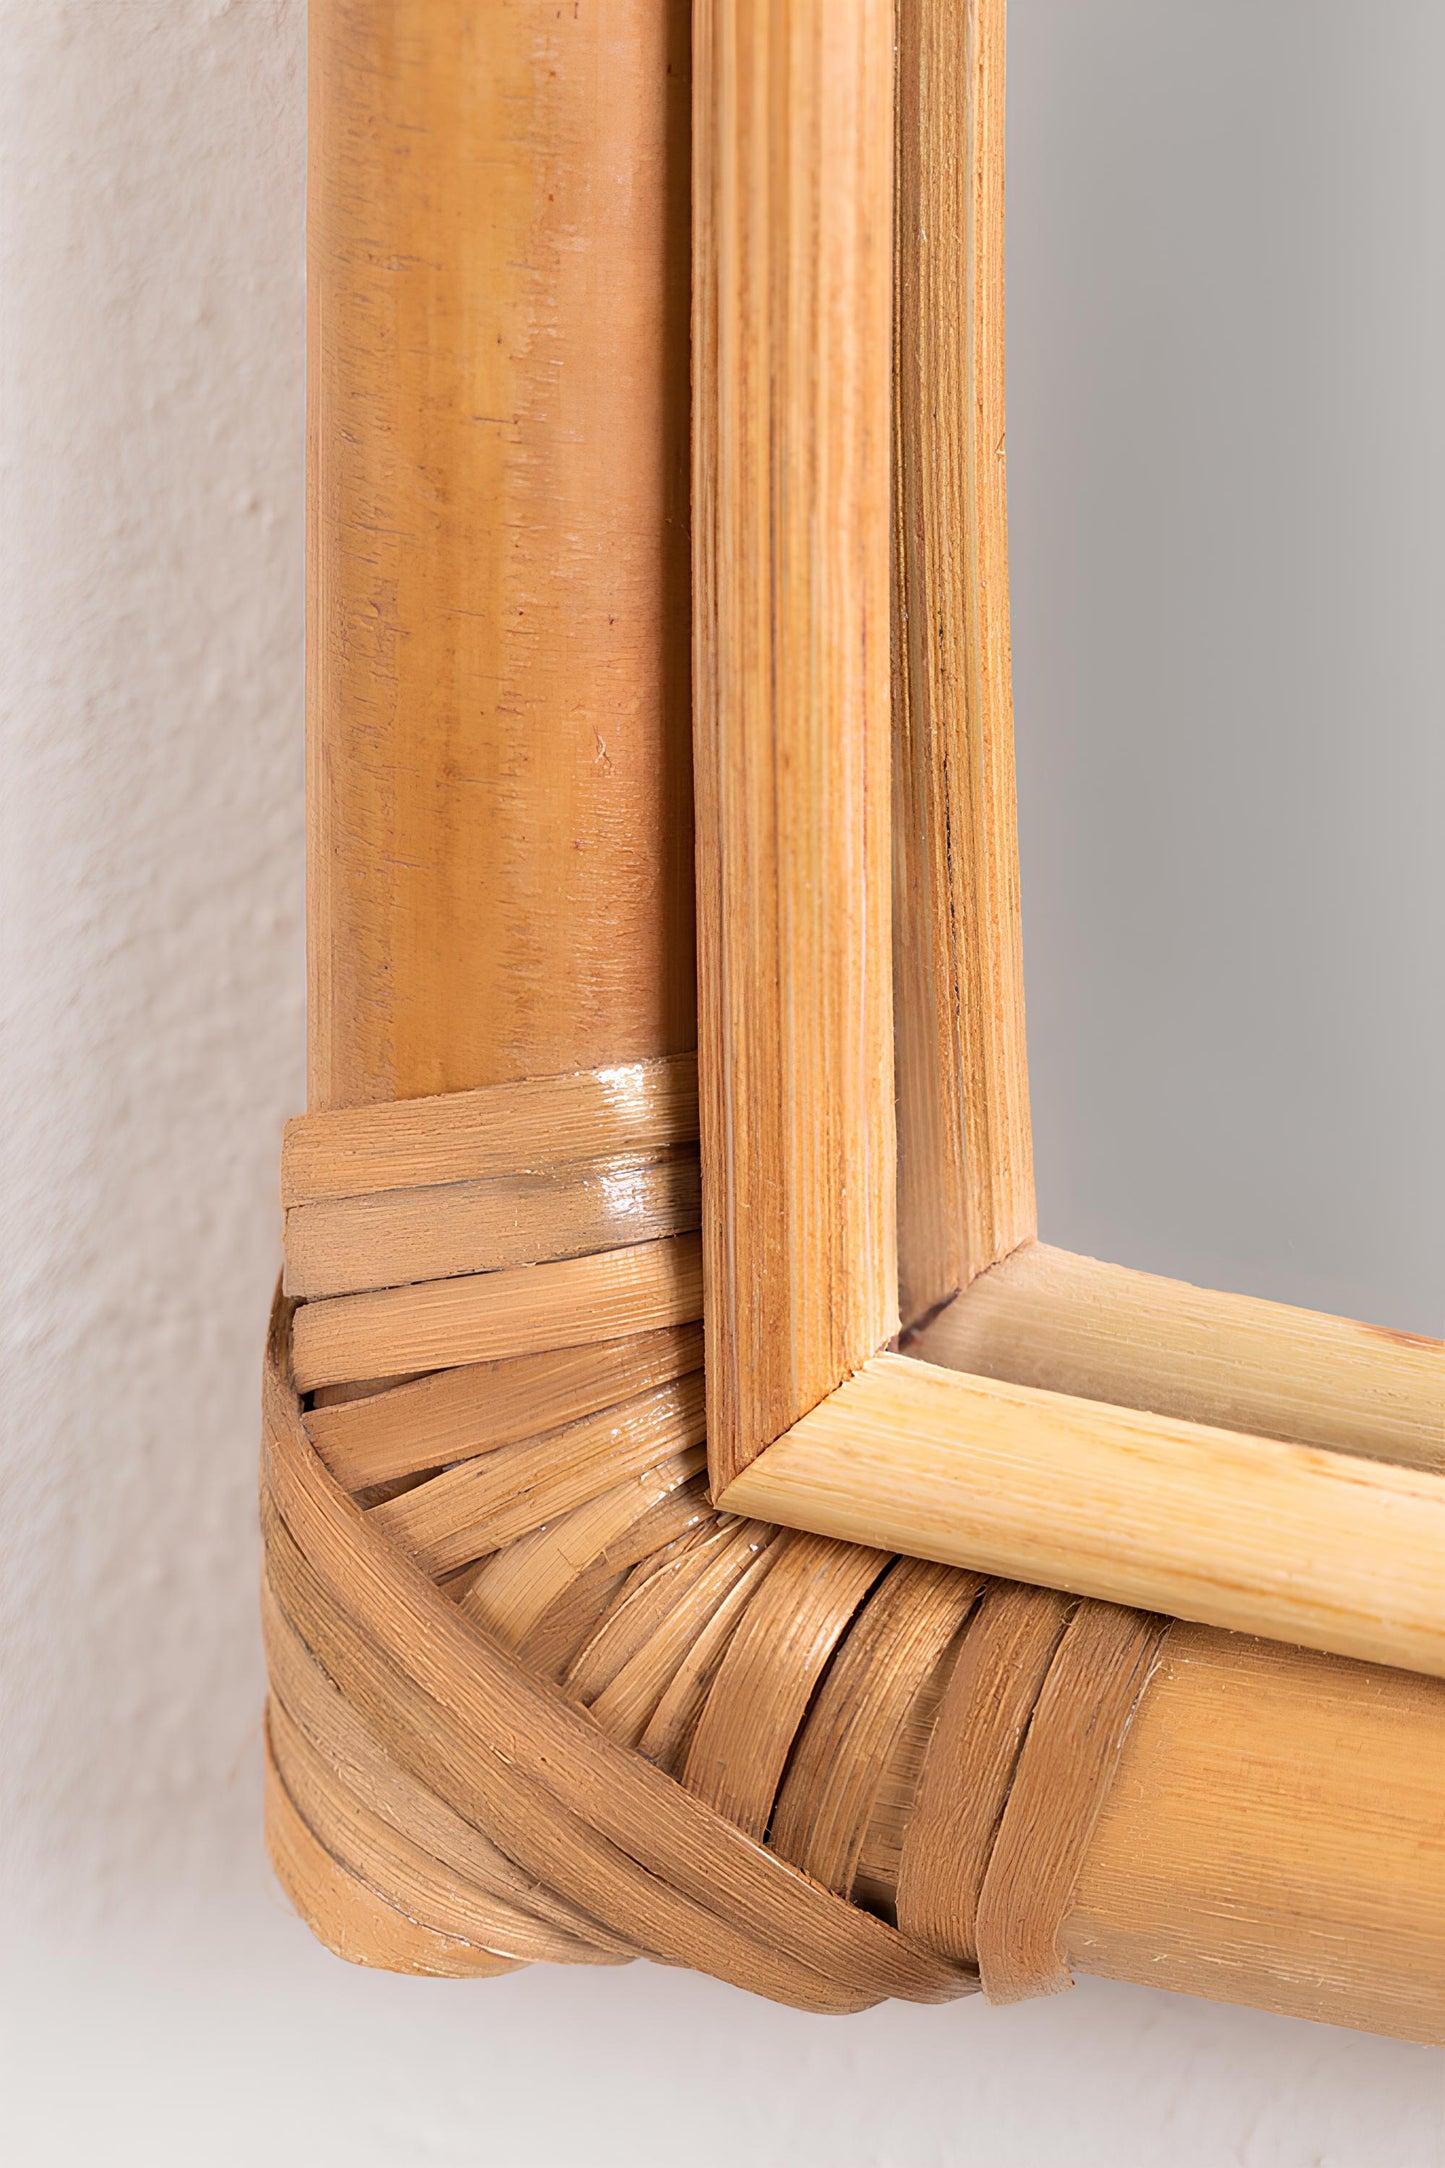 Bamboo Wall Mirror for living room | Cane Wall Mirror | Rattan Mirror - Shanaya - Akway